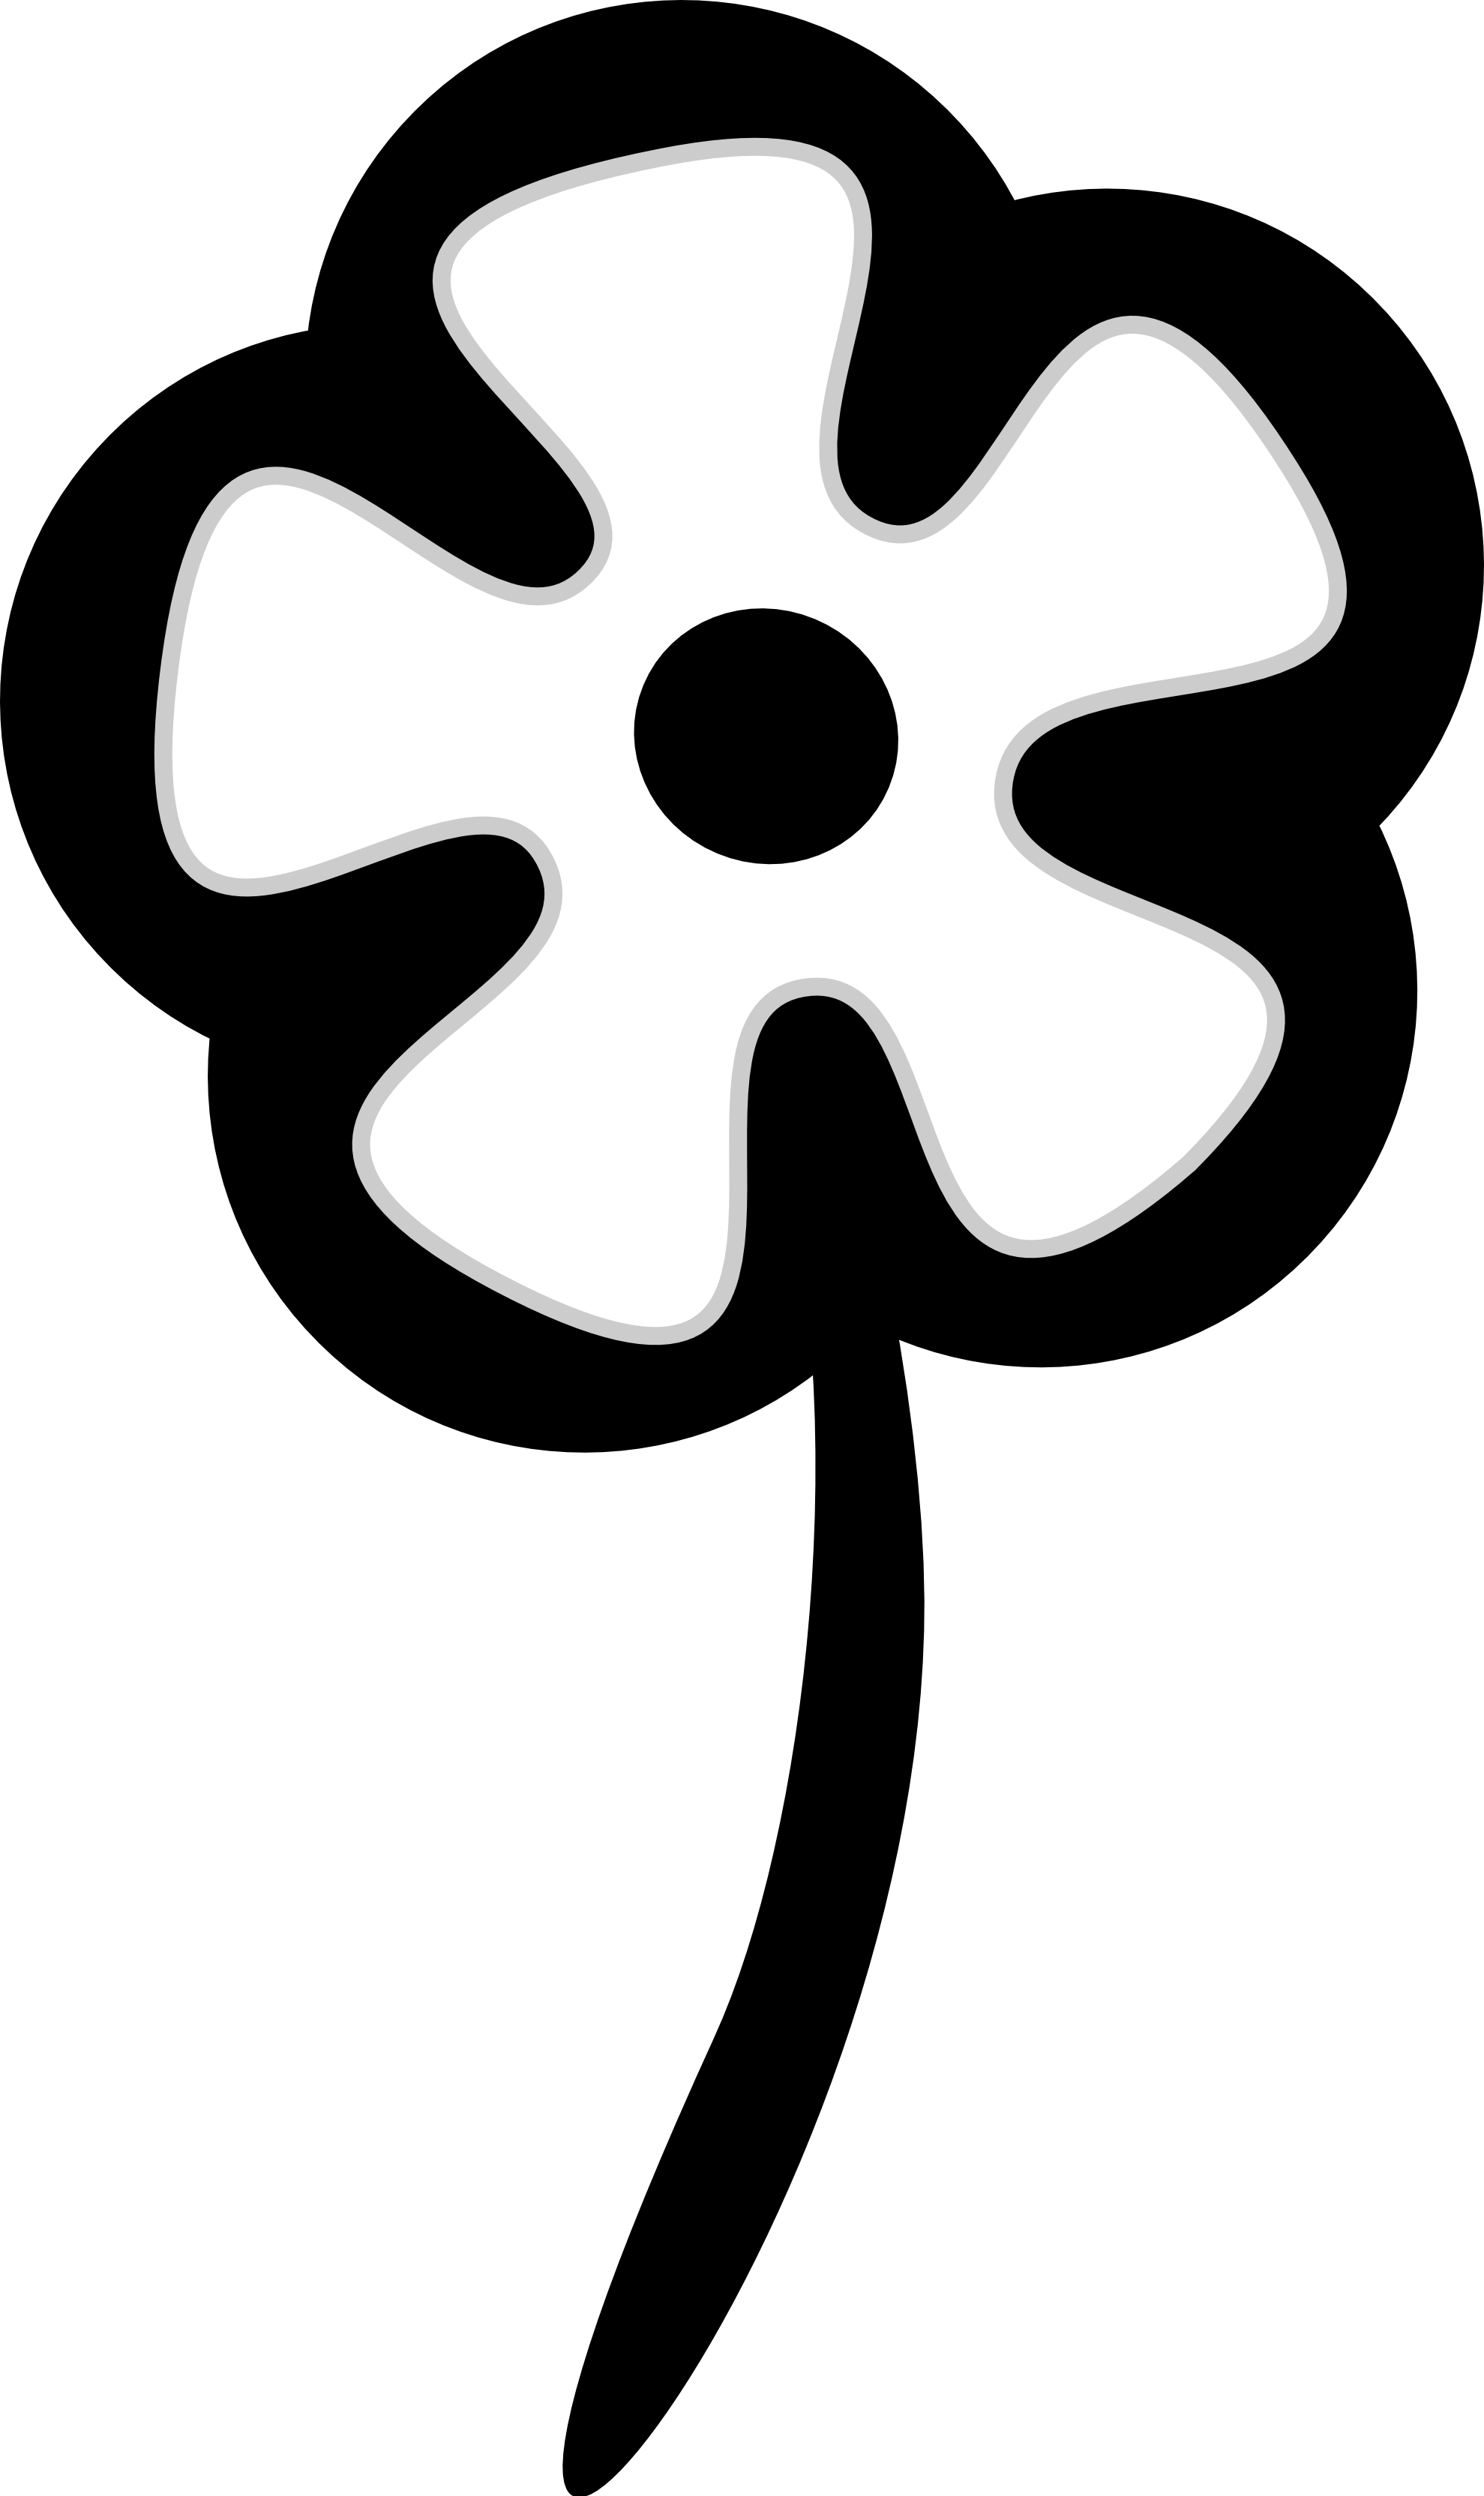 Black and White Flower Logo - Free Flower Image Black And White, Download Free Clip Art, Free